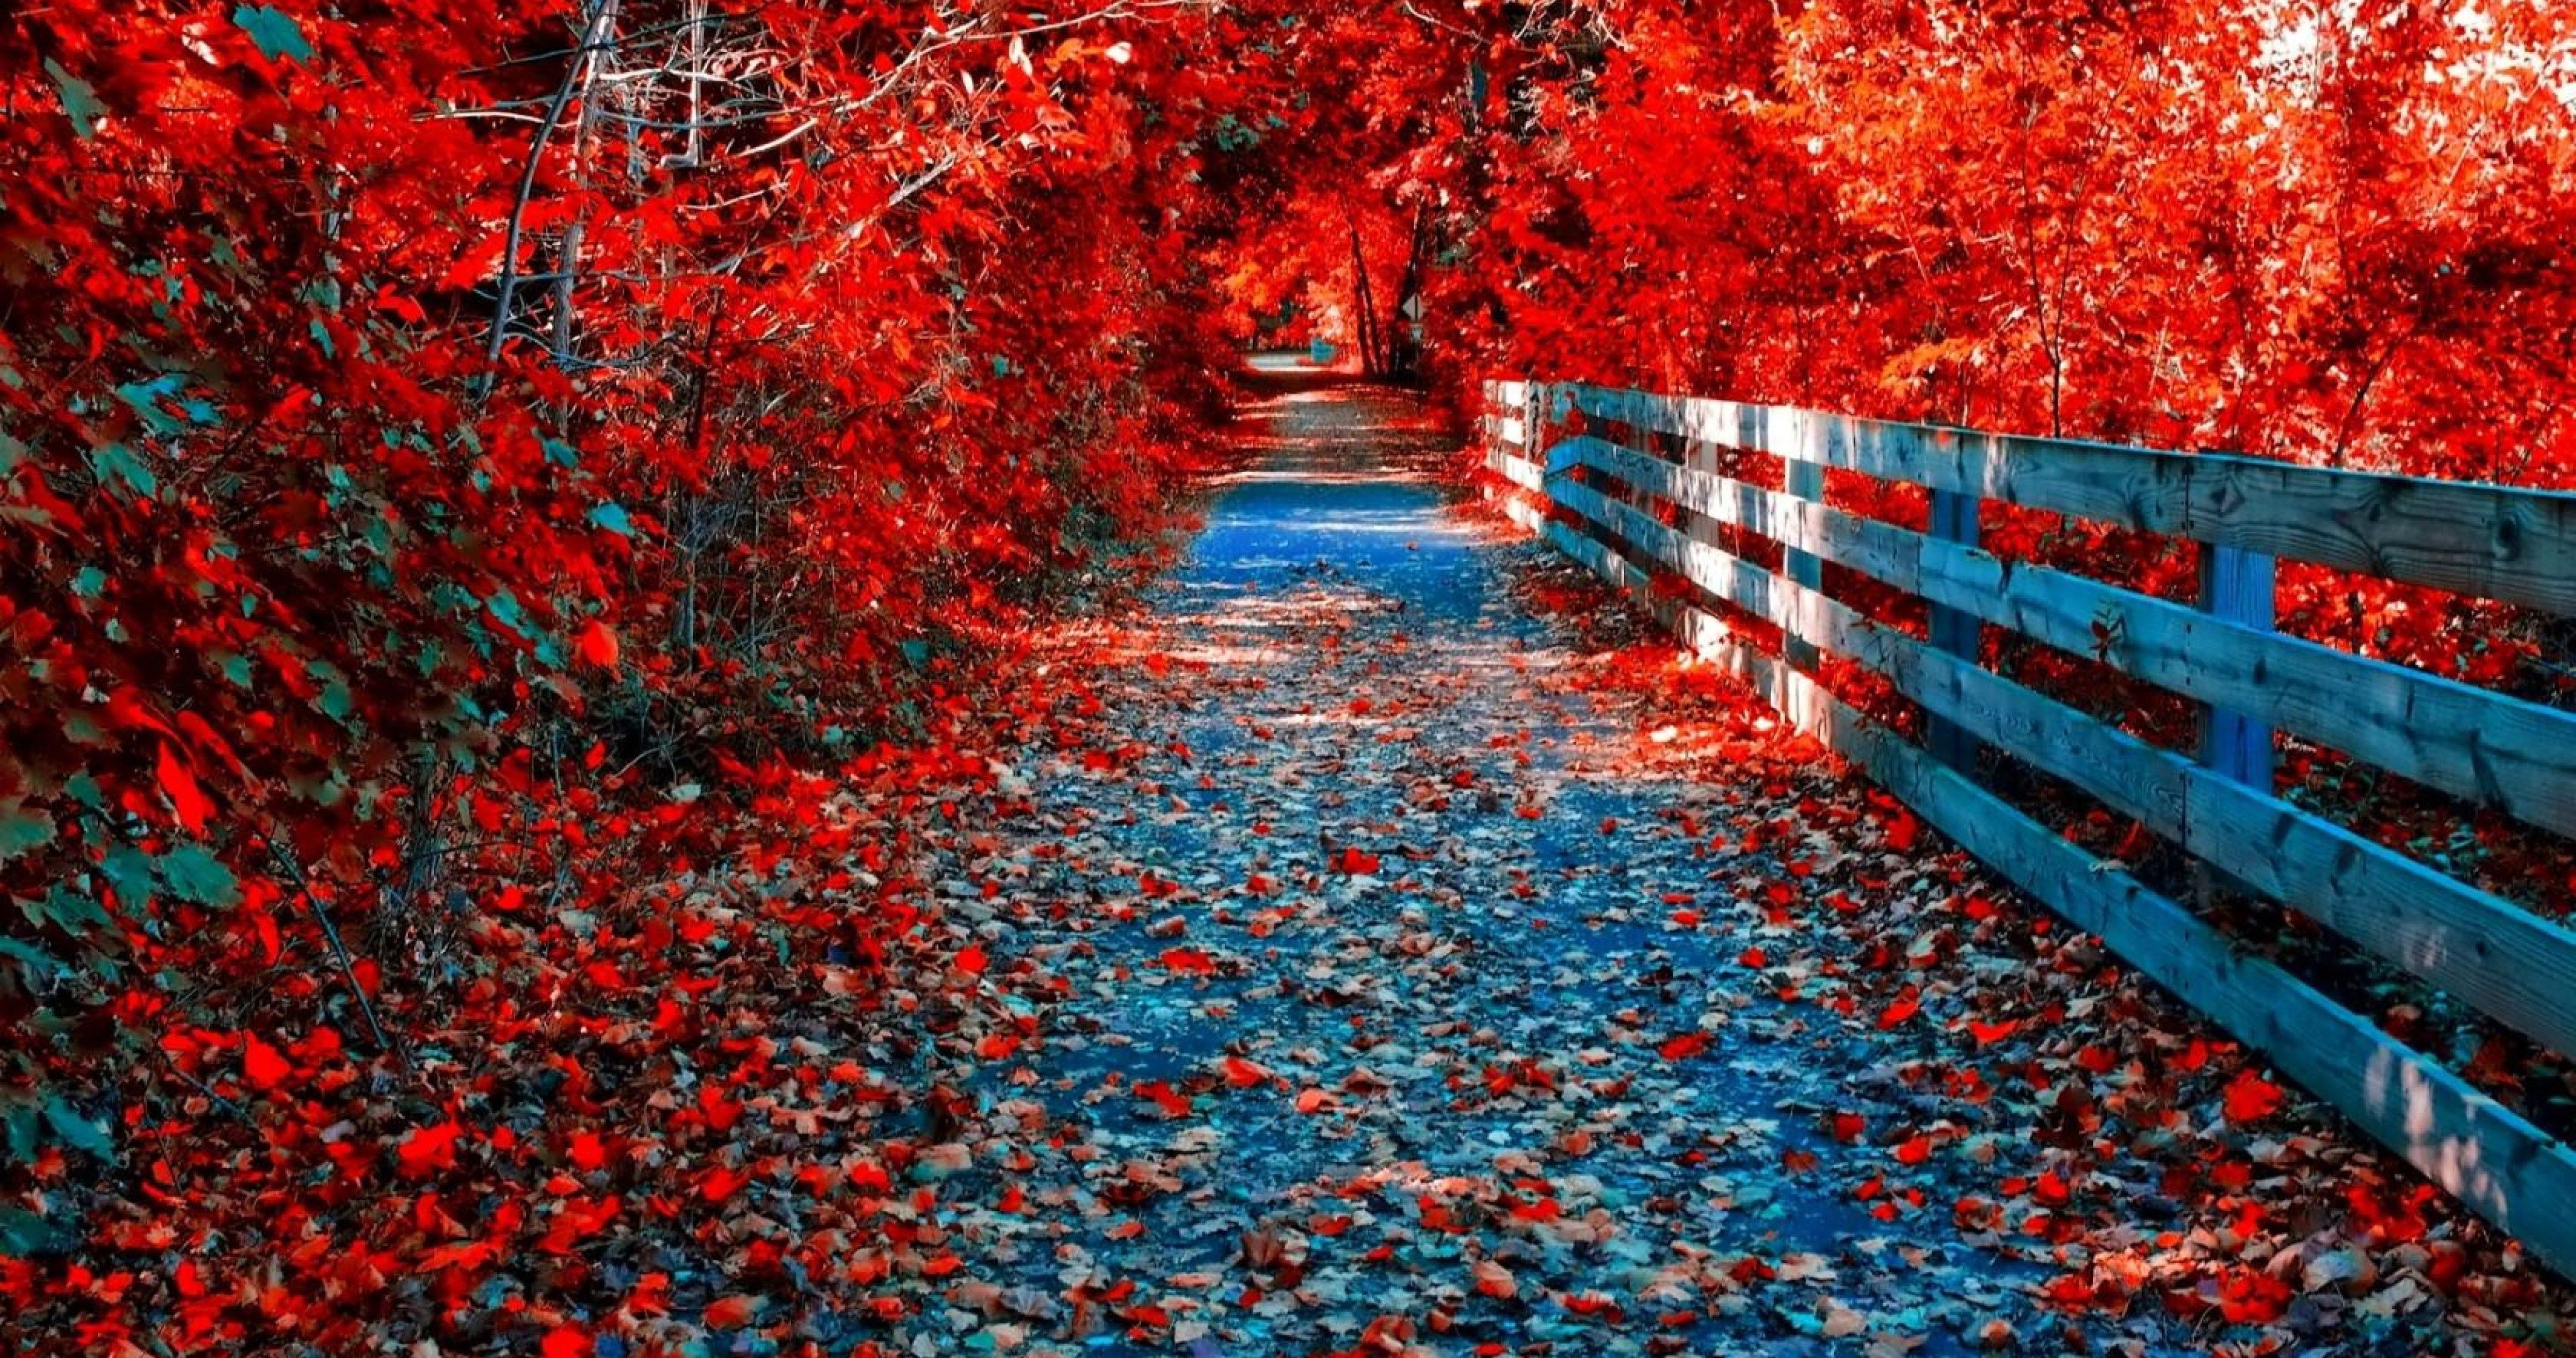 Red Autumn Wallpaper. Autumn leaves wallpaper, Autumn scenery, HD nature wallpaper